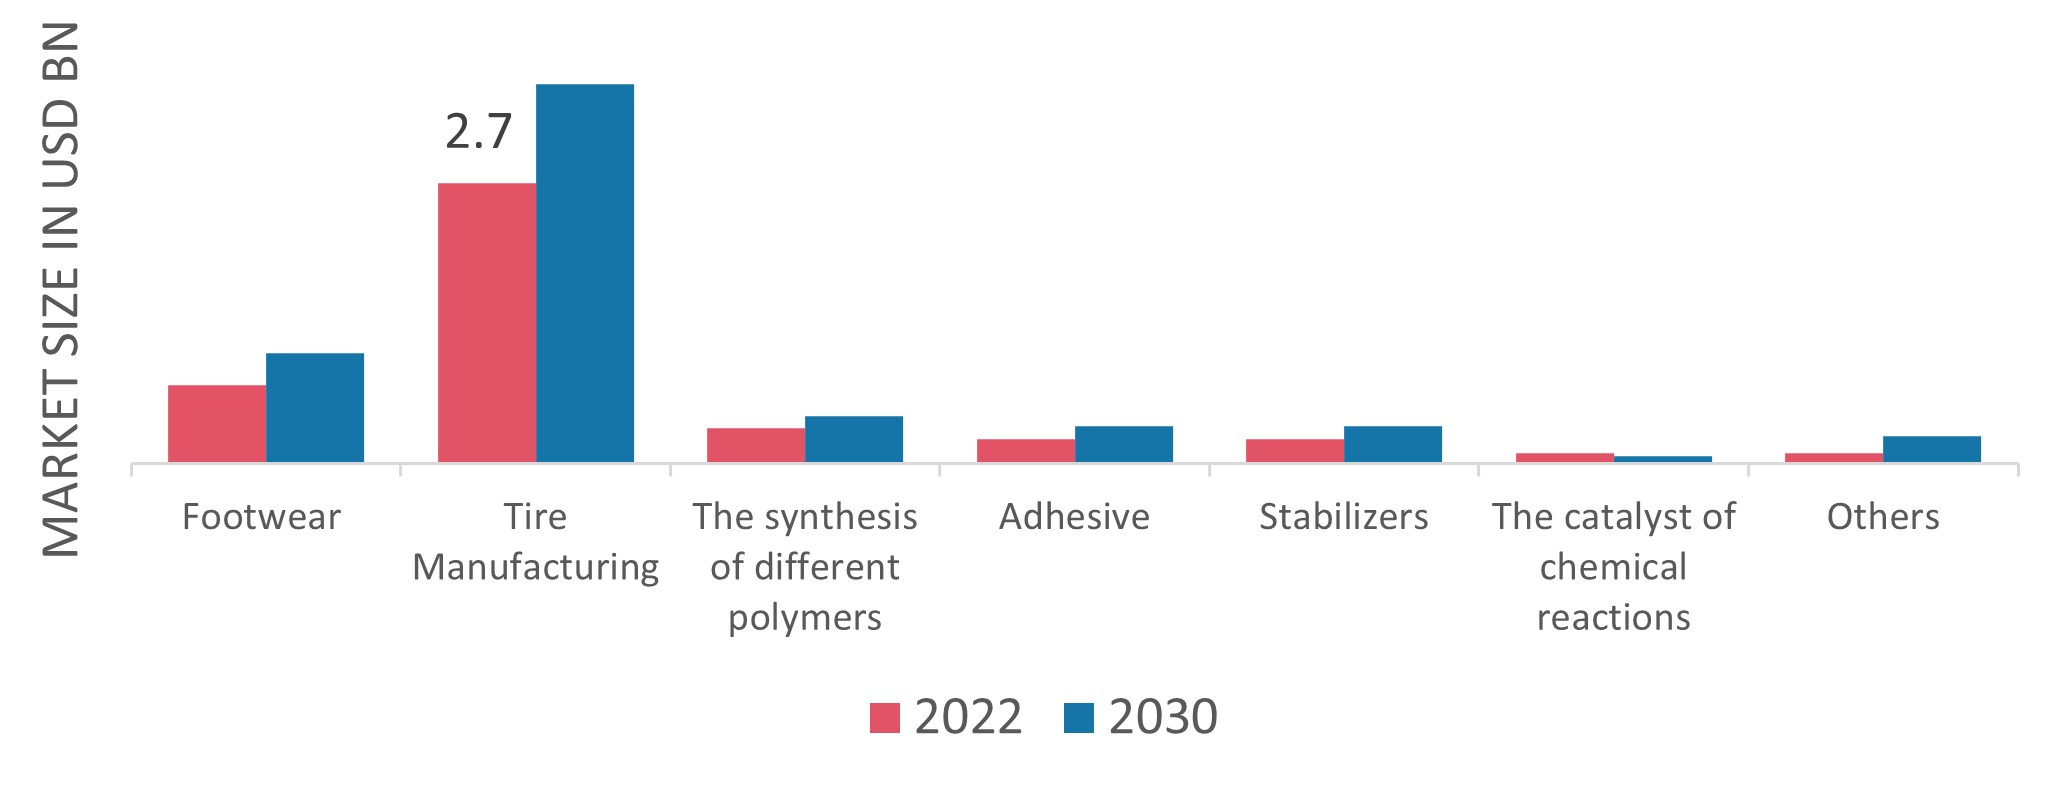 Styrene-Butadiene Rubber Market, by Application Type, 2022 & 2030